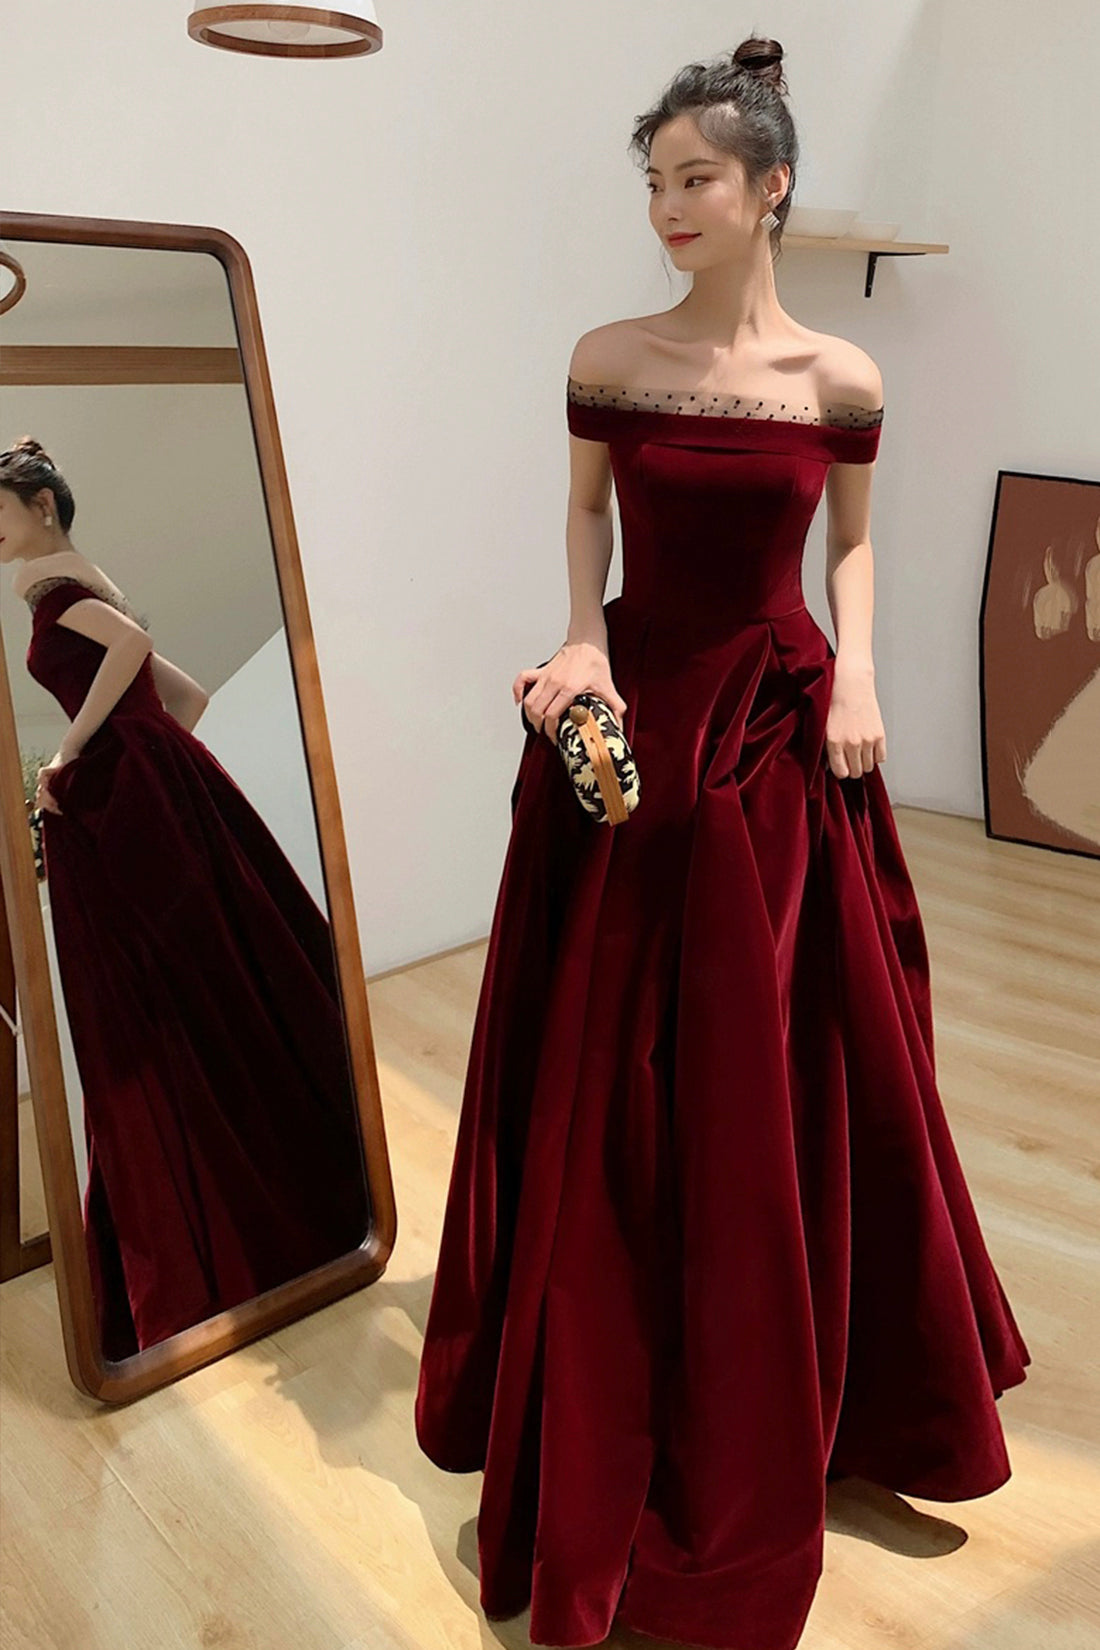 Burgundy Velvet Floor Length Prom Dress, Beautiful A-Line Evening Party Dress